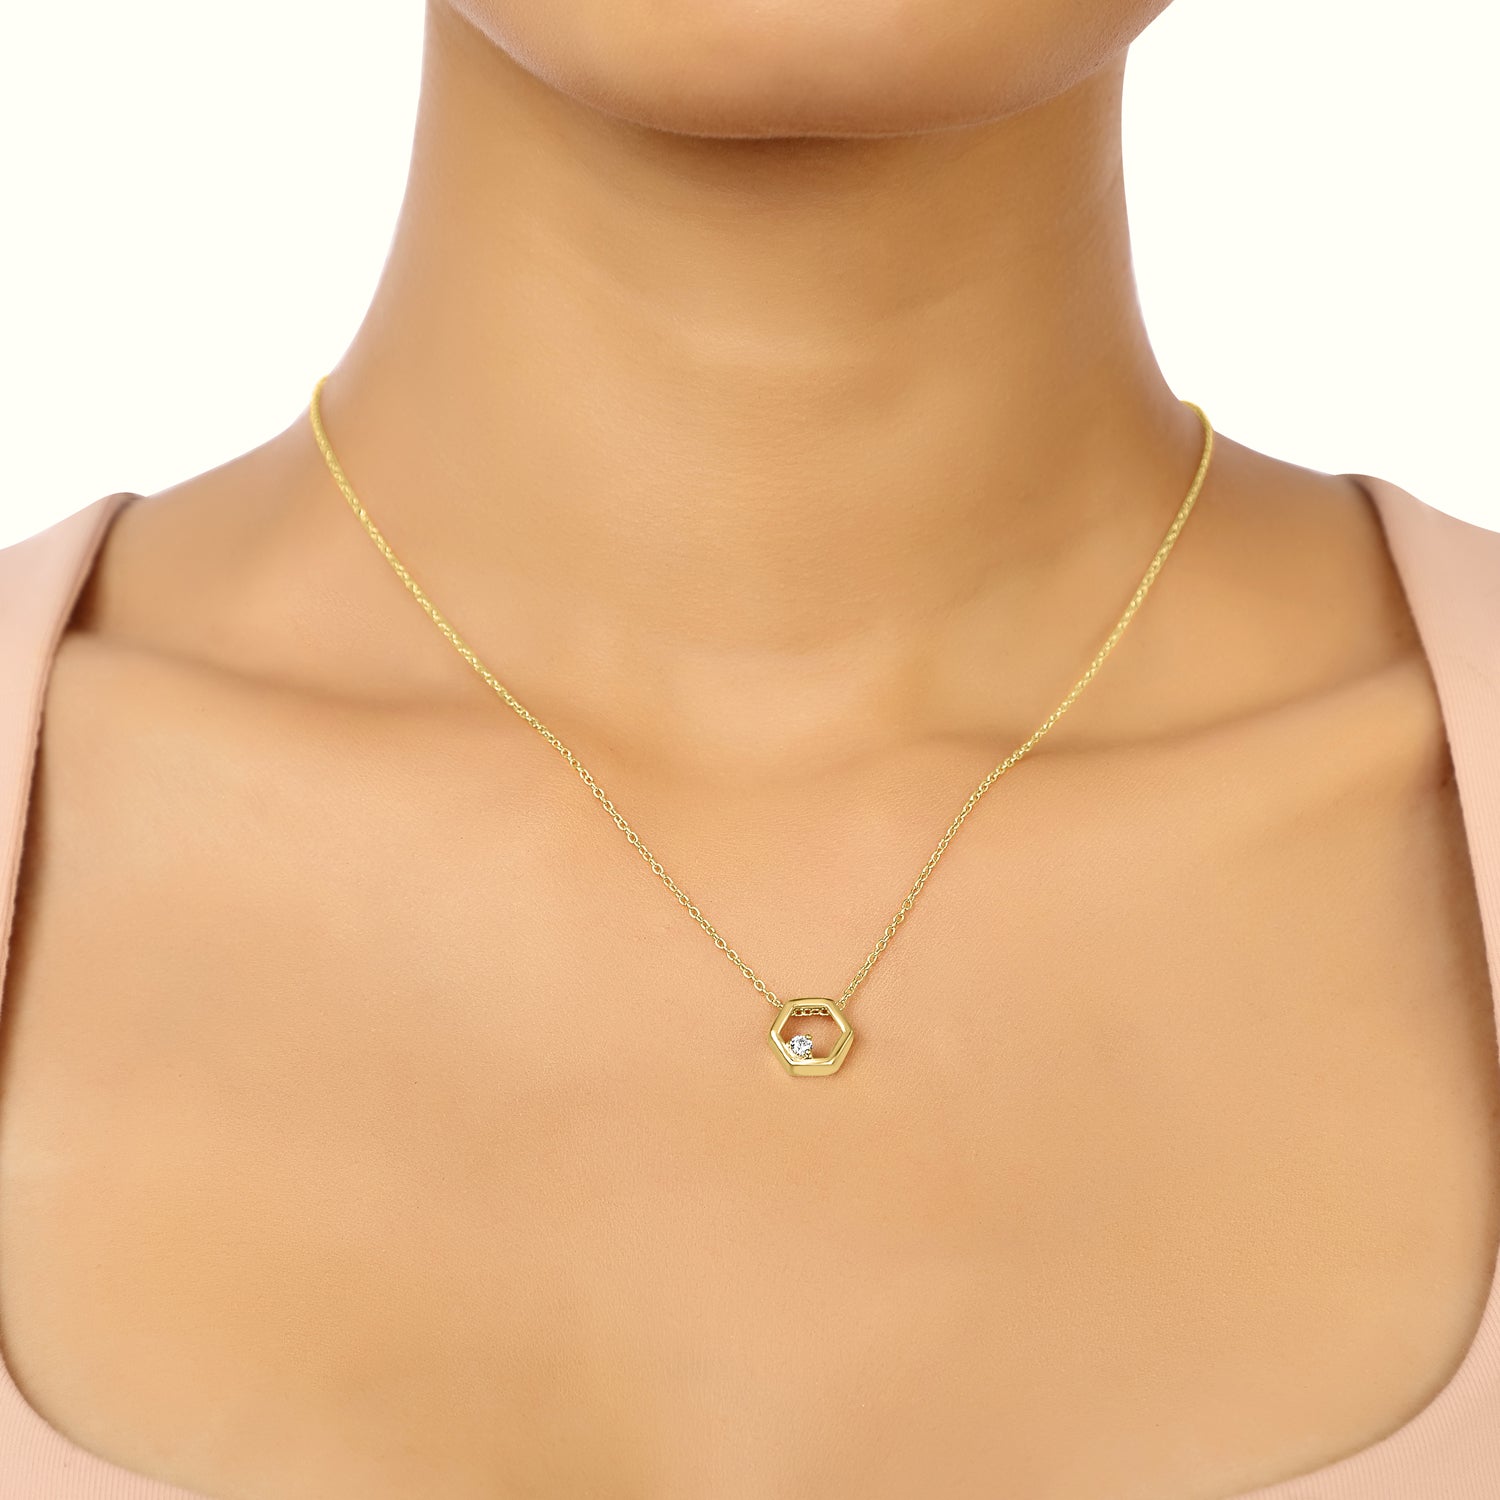 Neck Jewelry - Oh Honey Esther Adorned